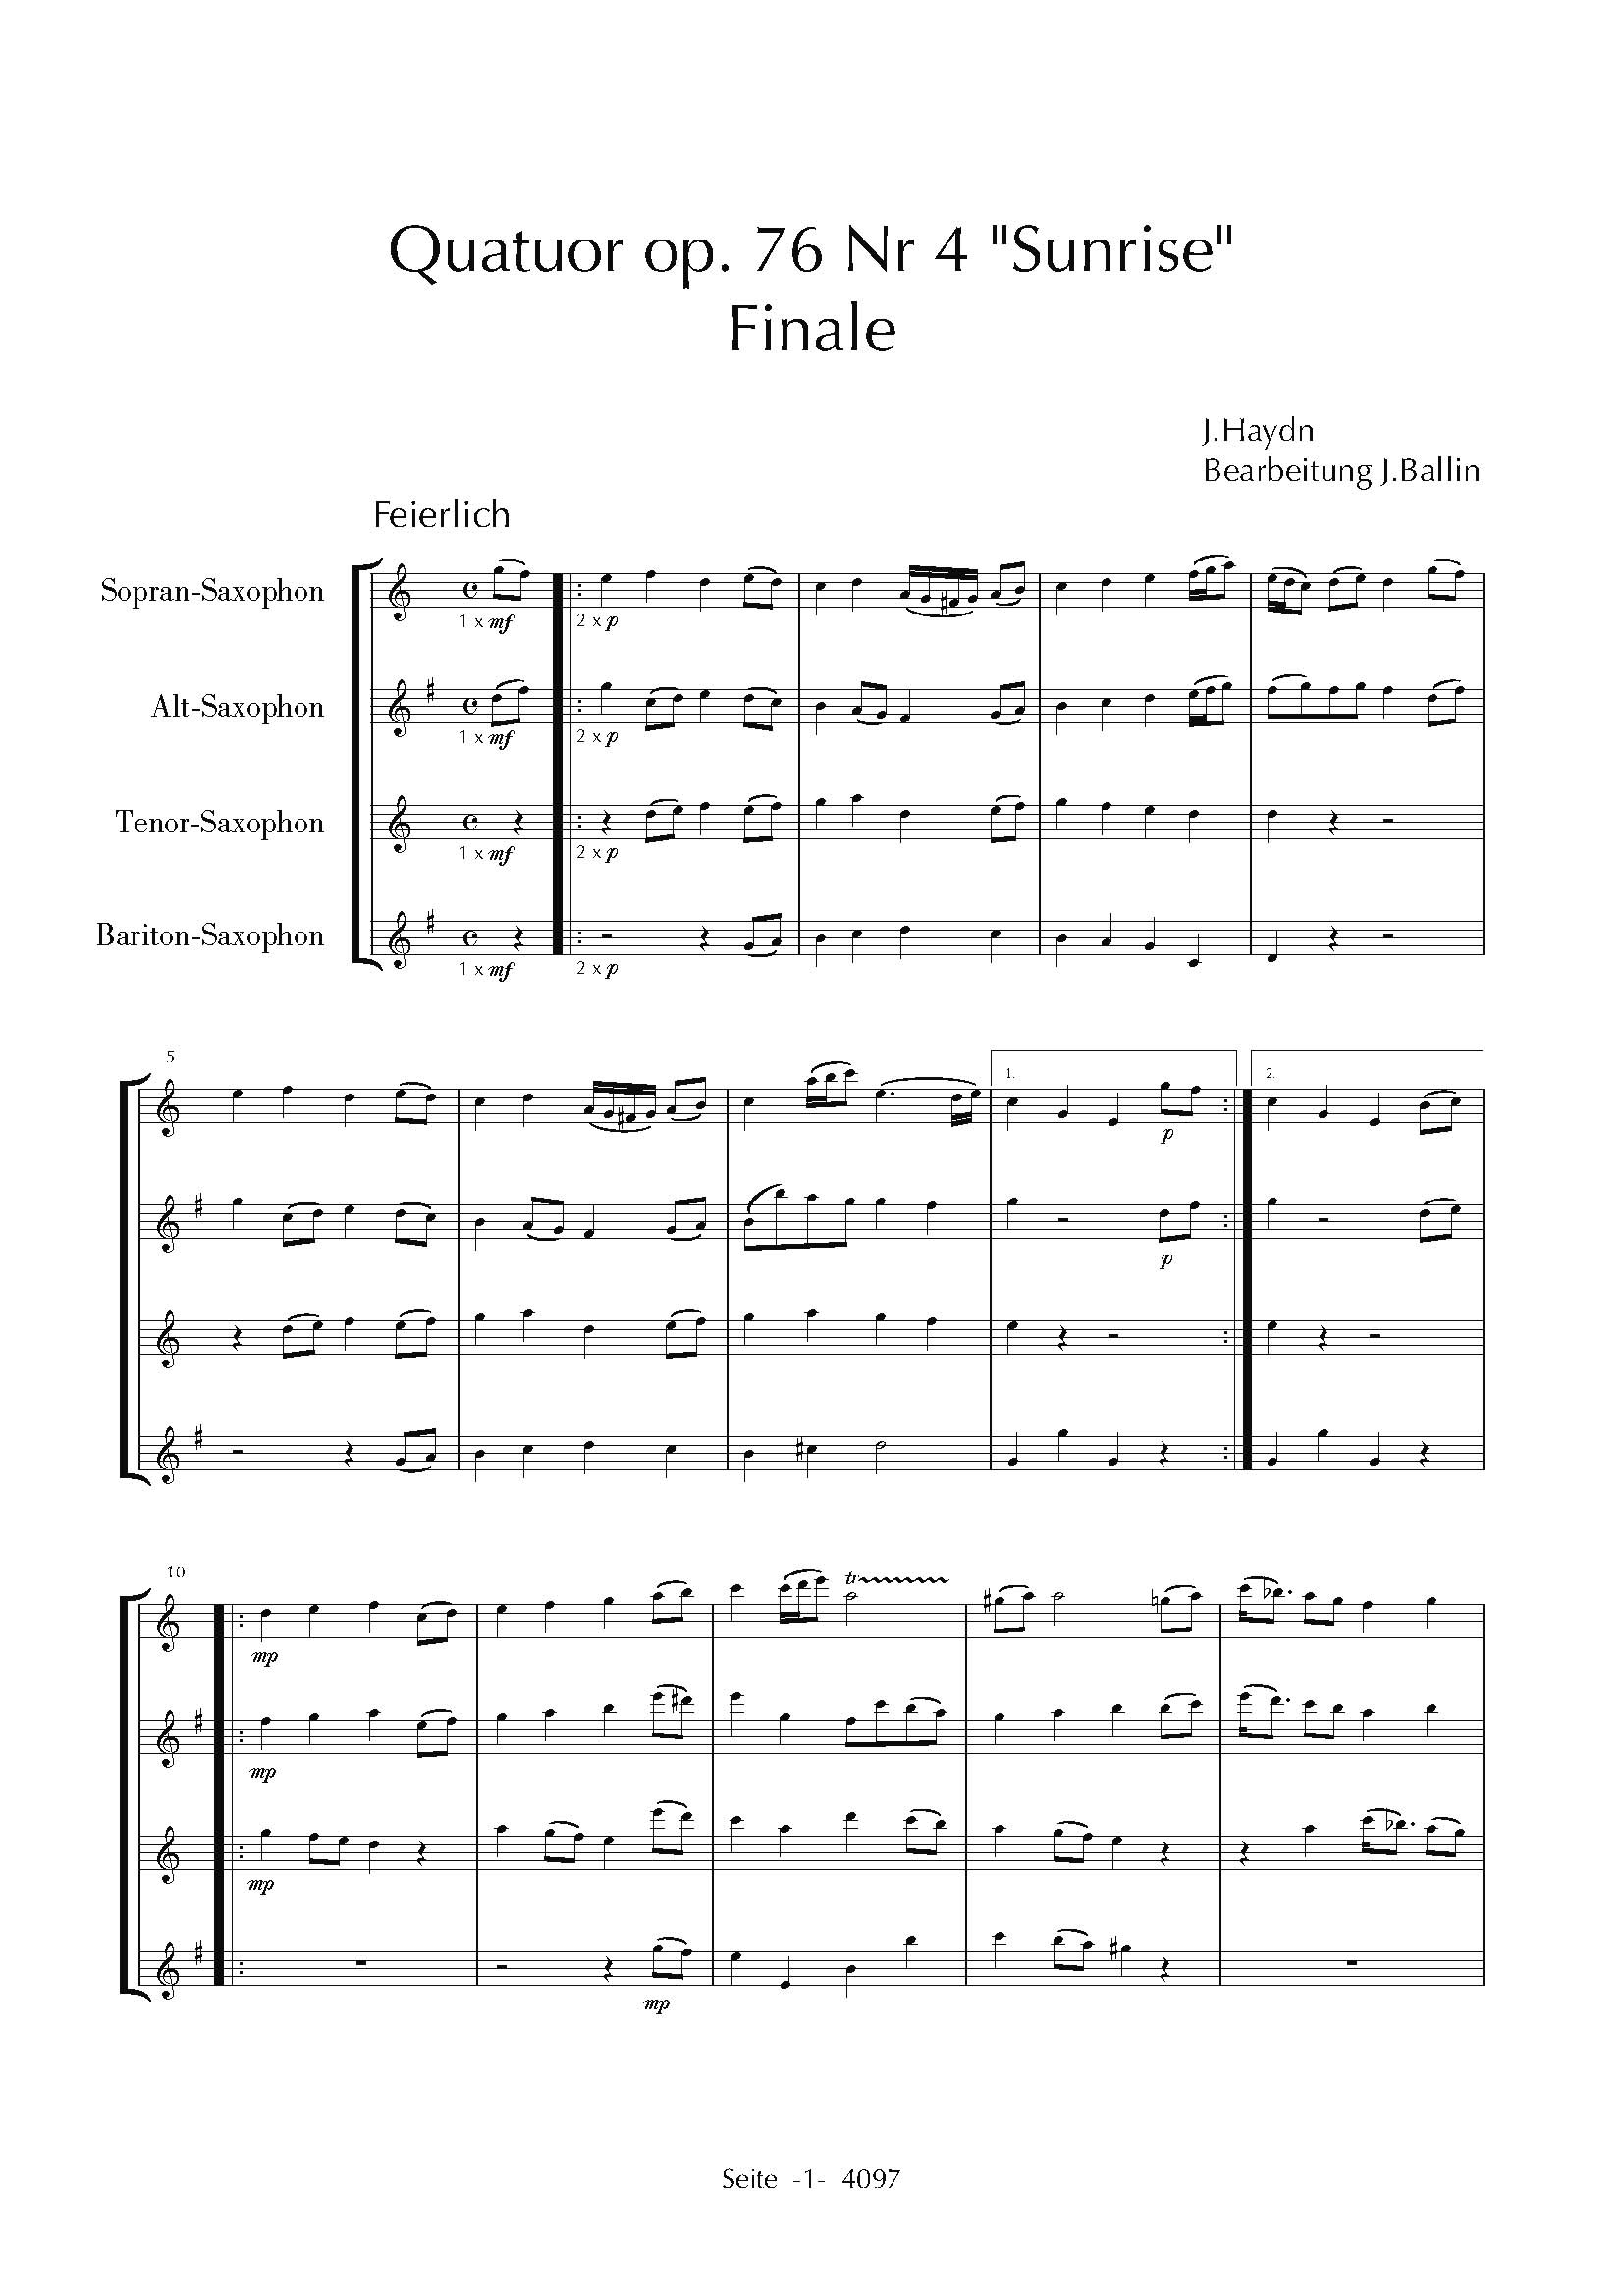 Quatuor op. 76 Nr. 4 Sunrise - Finale (HAYDN FRANZ JOSEF) (HAYDN FRANZ JOSEF)